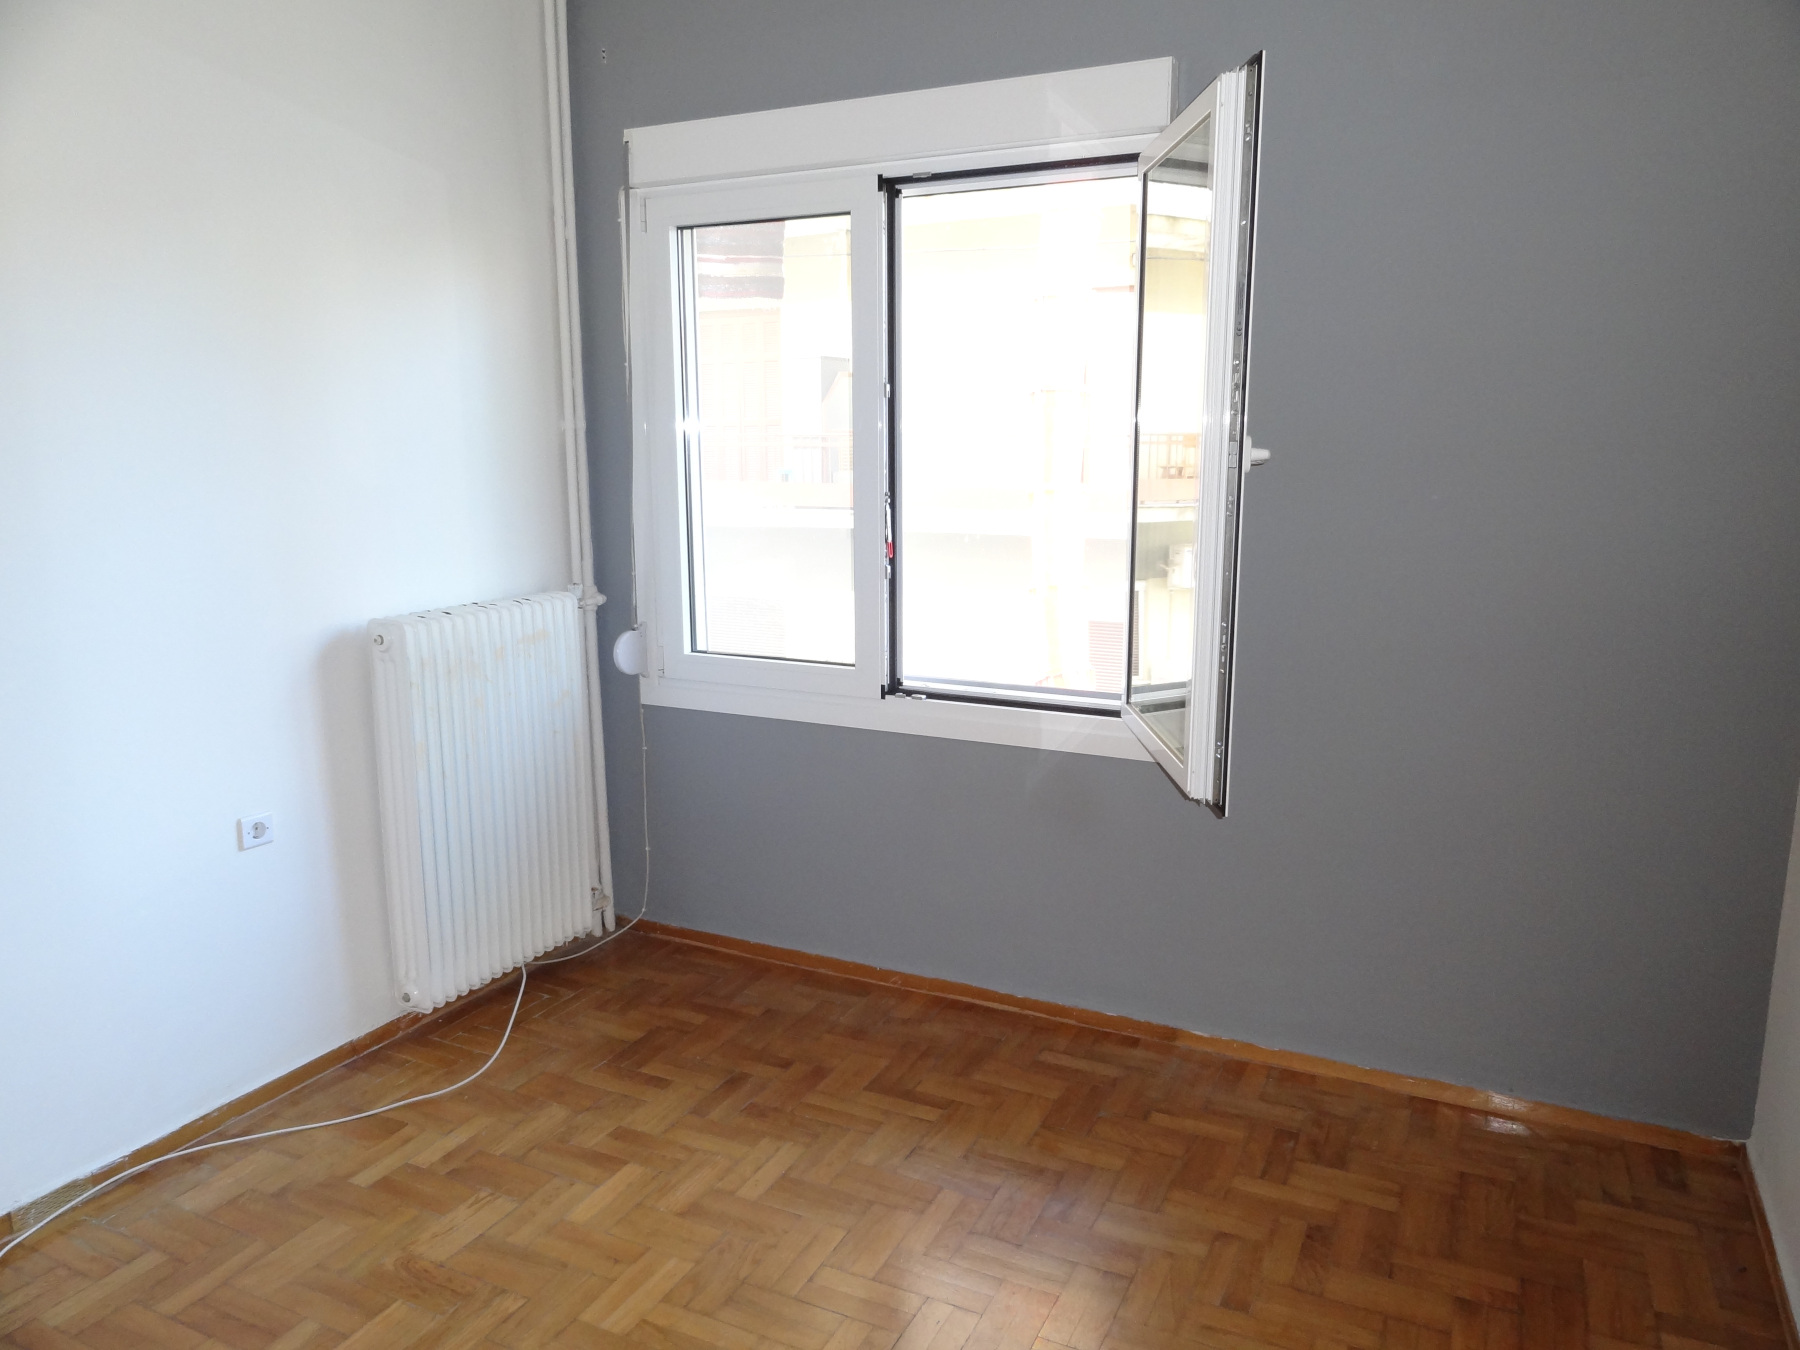 1 beroom apartment for rent, 54 sq.m. 1st floor in the center of Ioannina near Dodoni Avenue